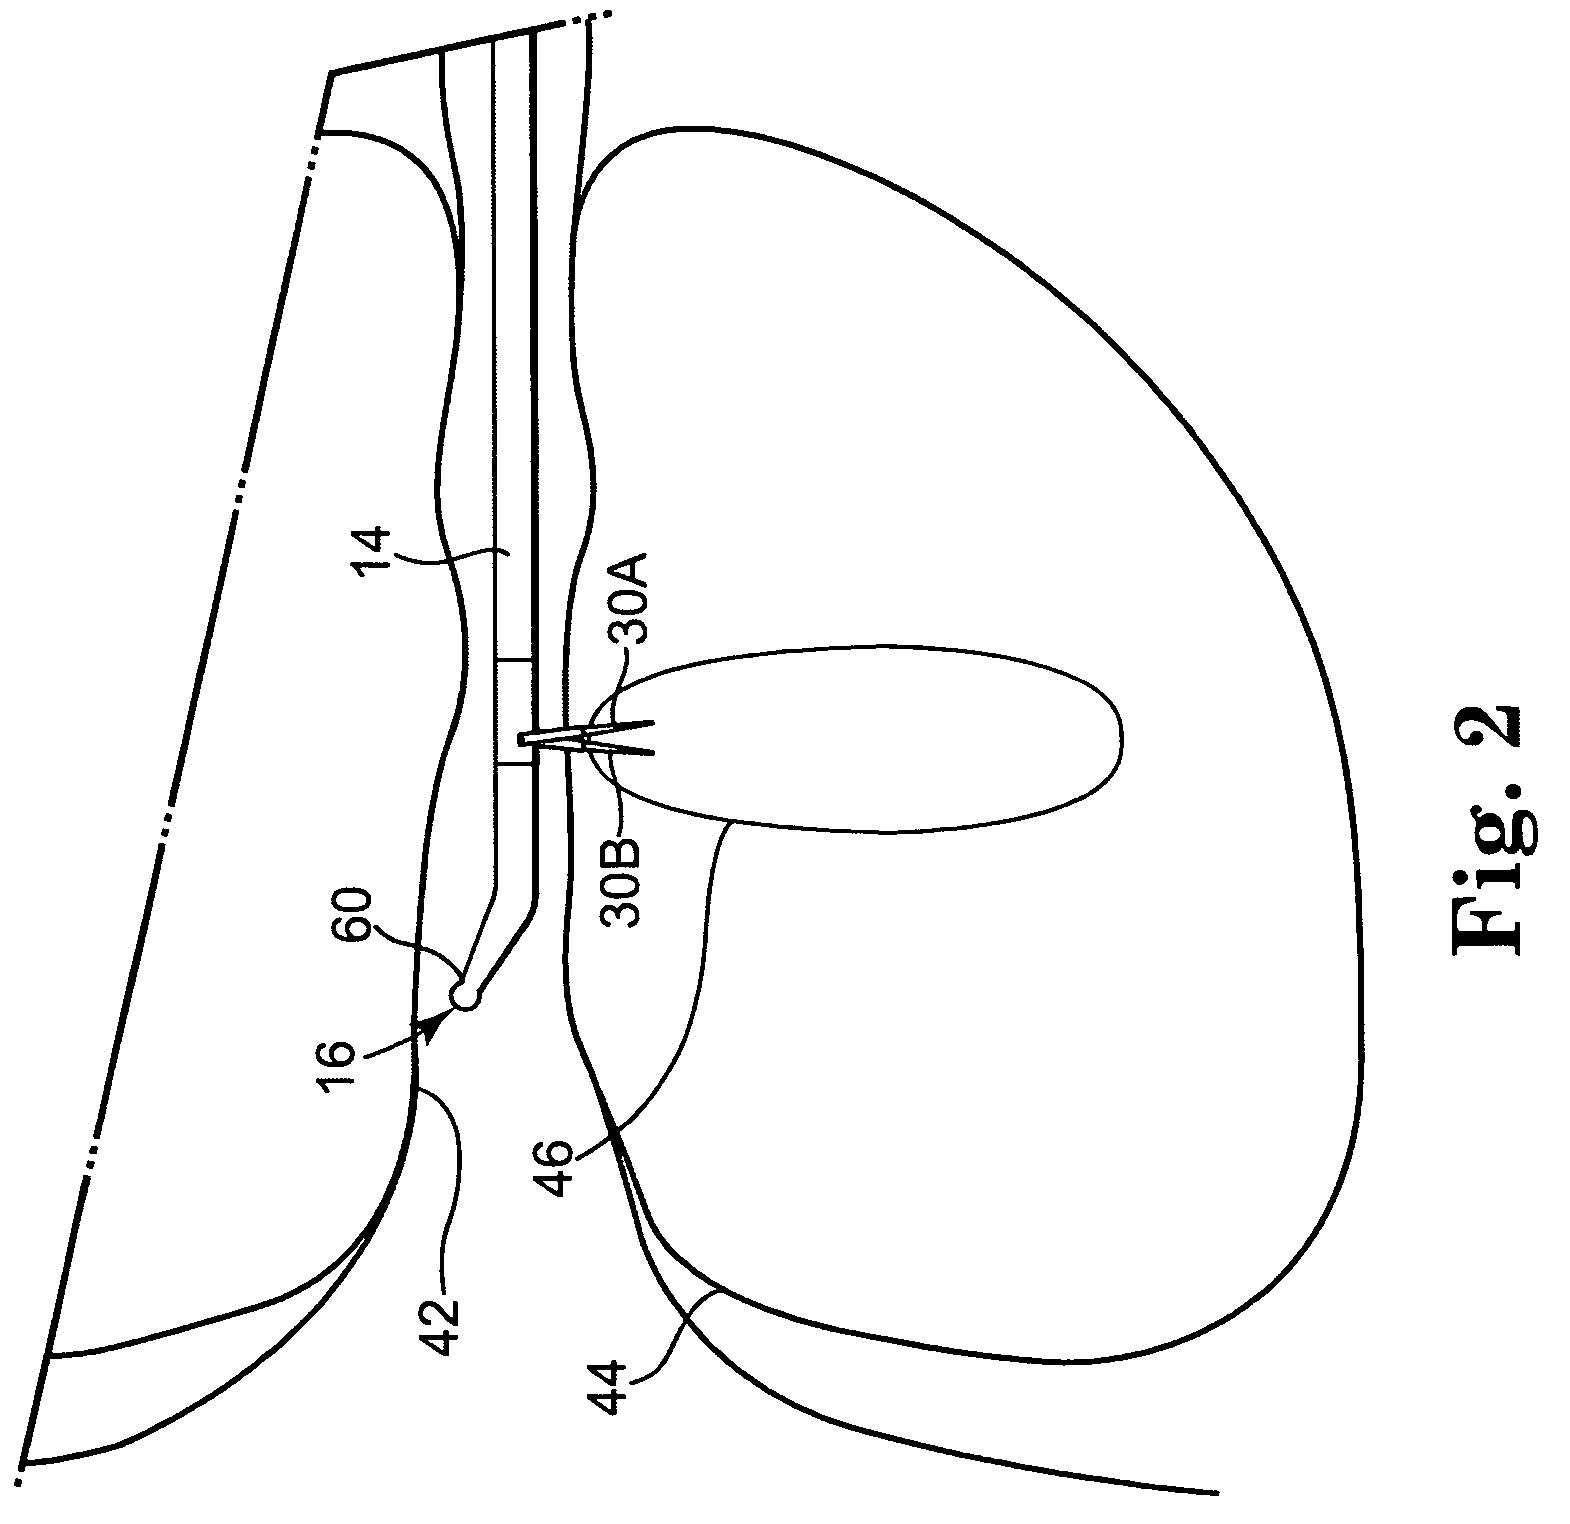 Transurethral needle ablation system